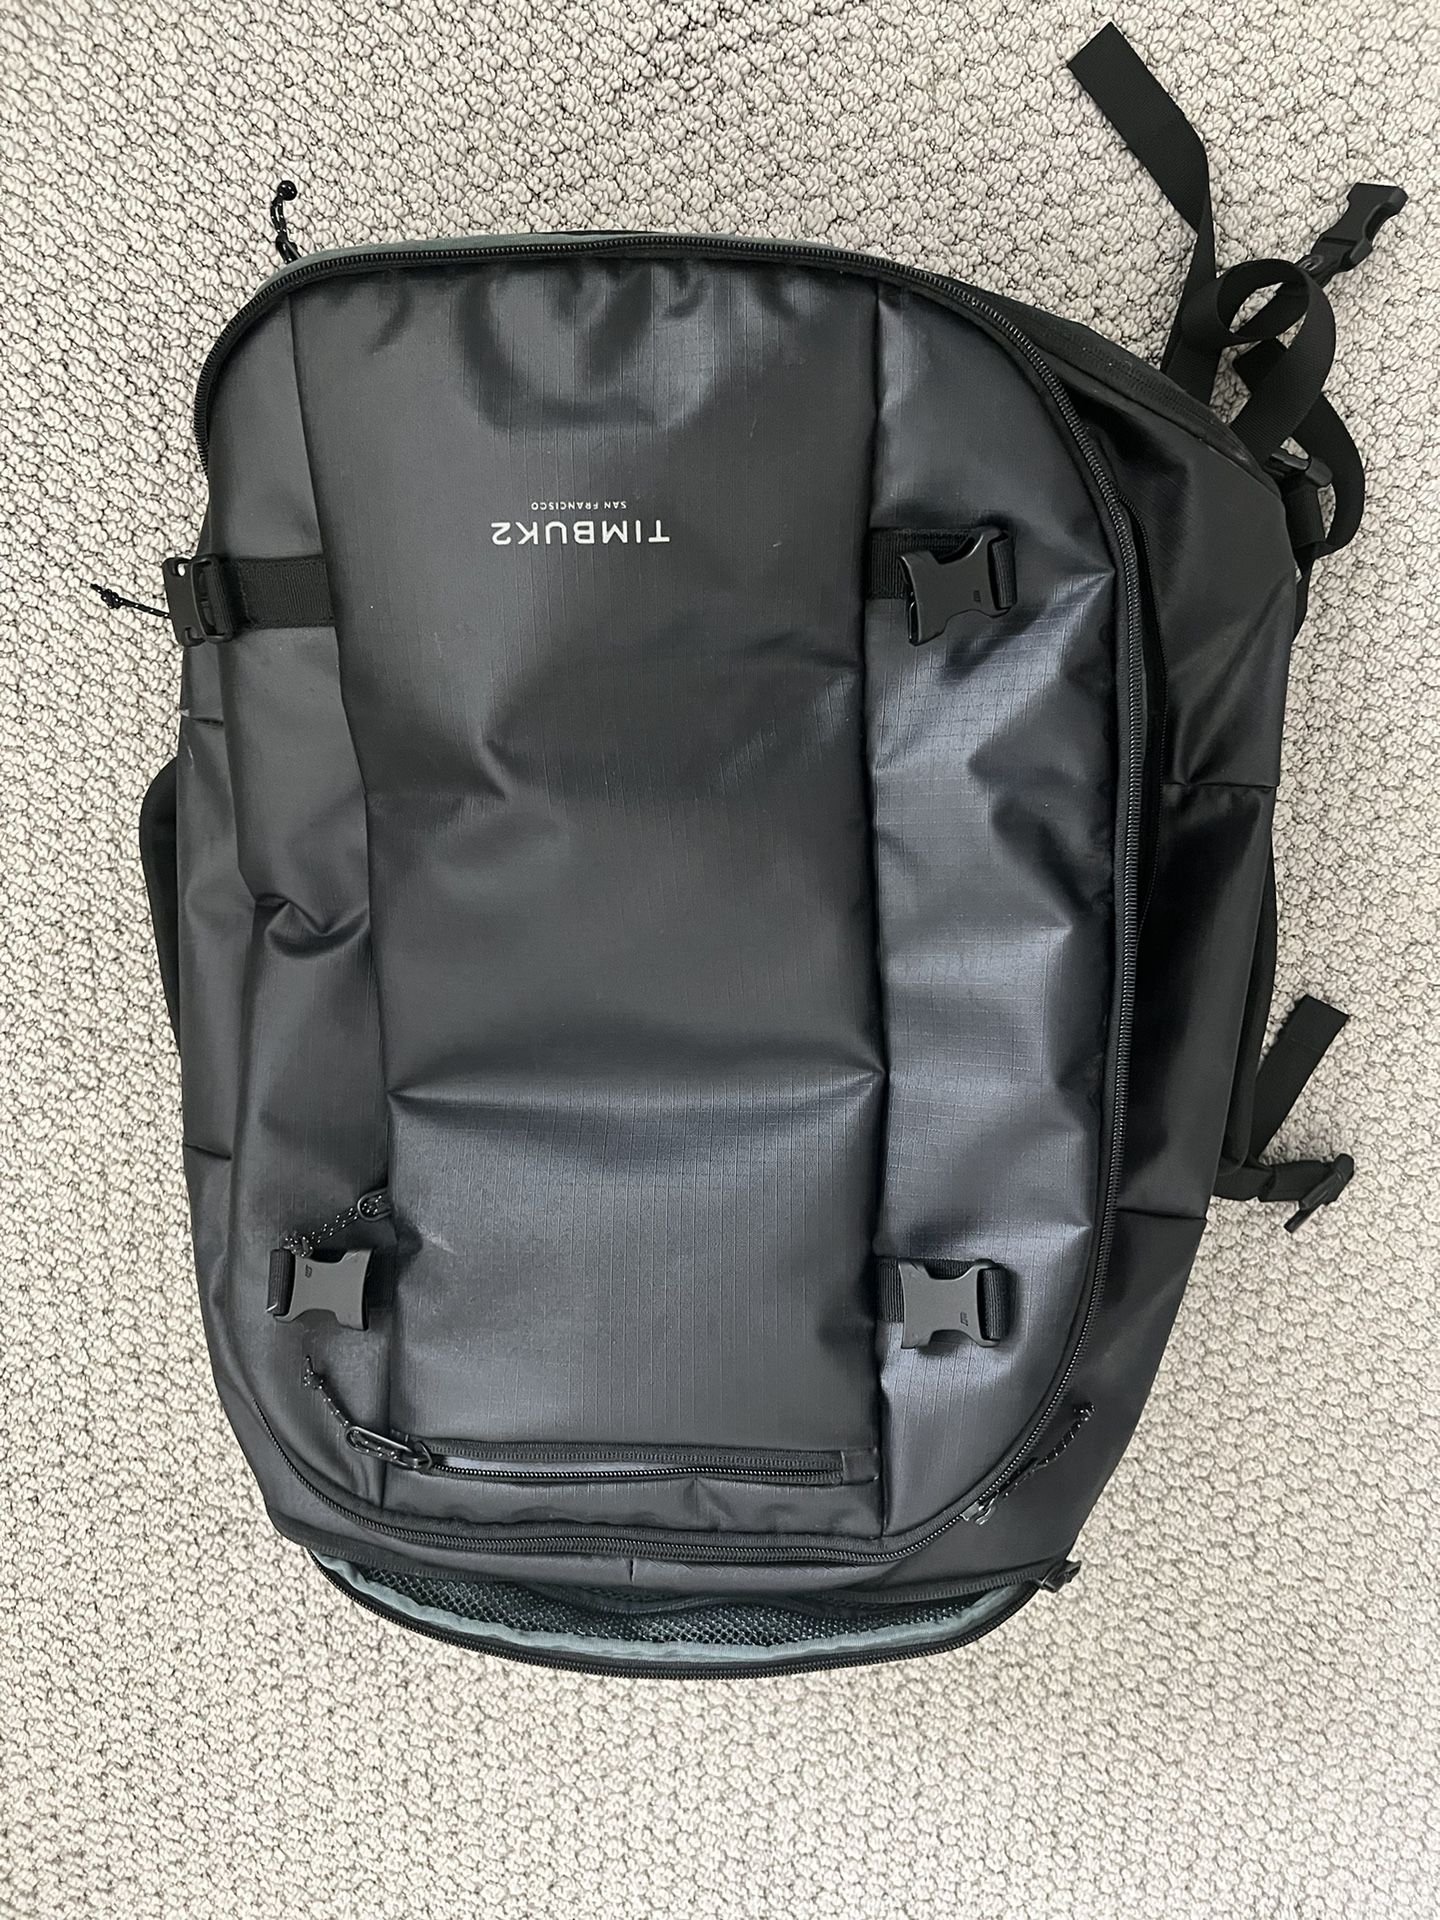 Timbuk2 Wander Backpack Duffel - OS / Jet Black